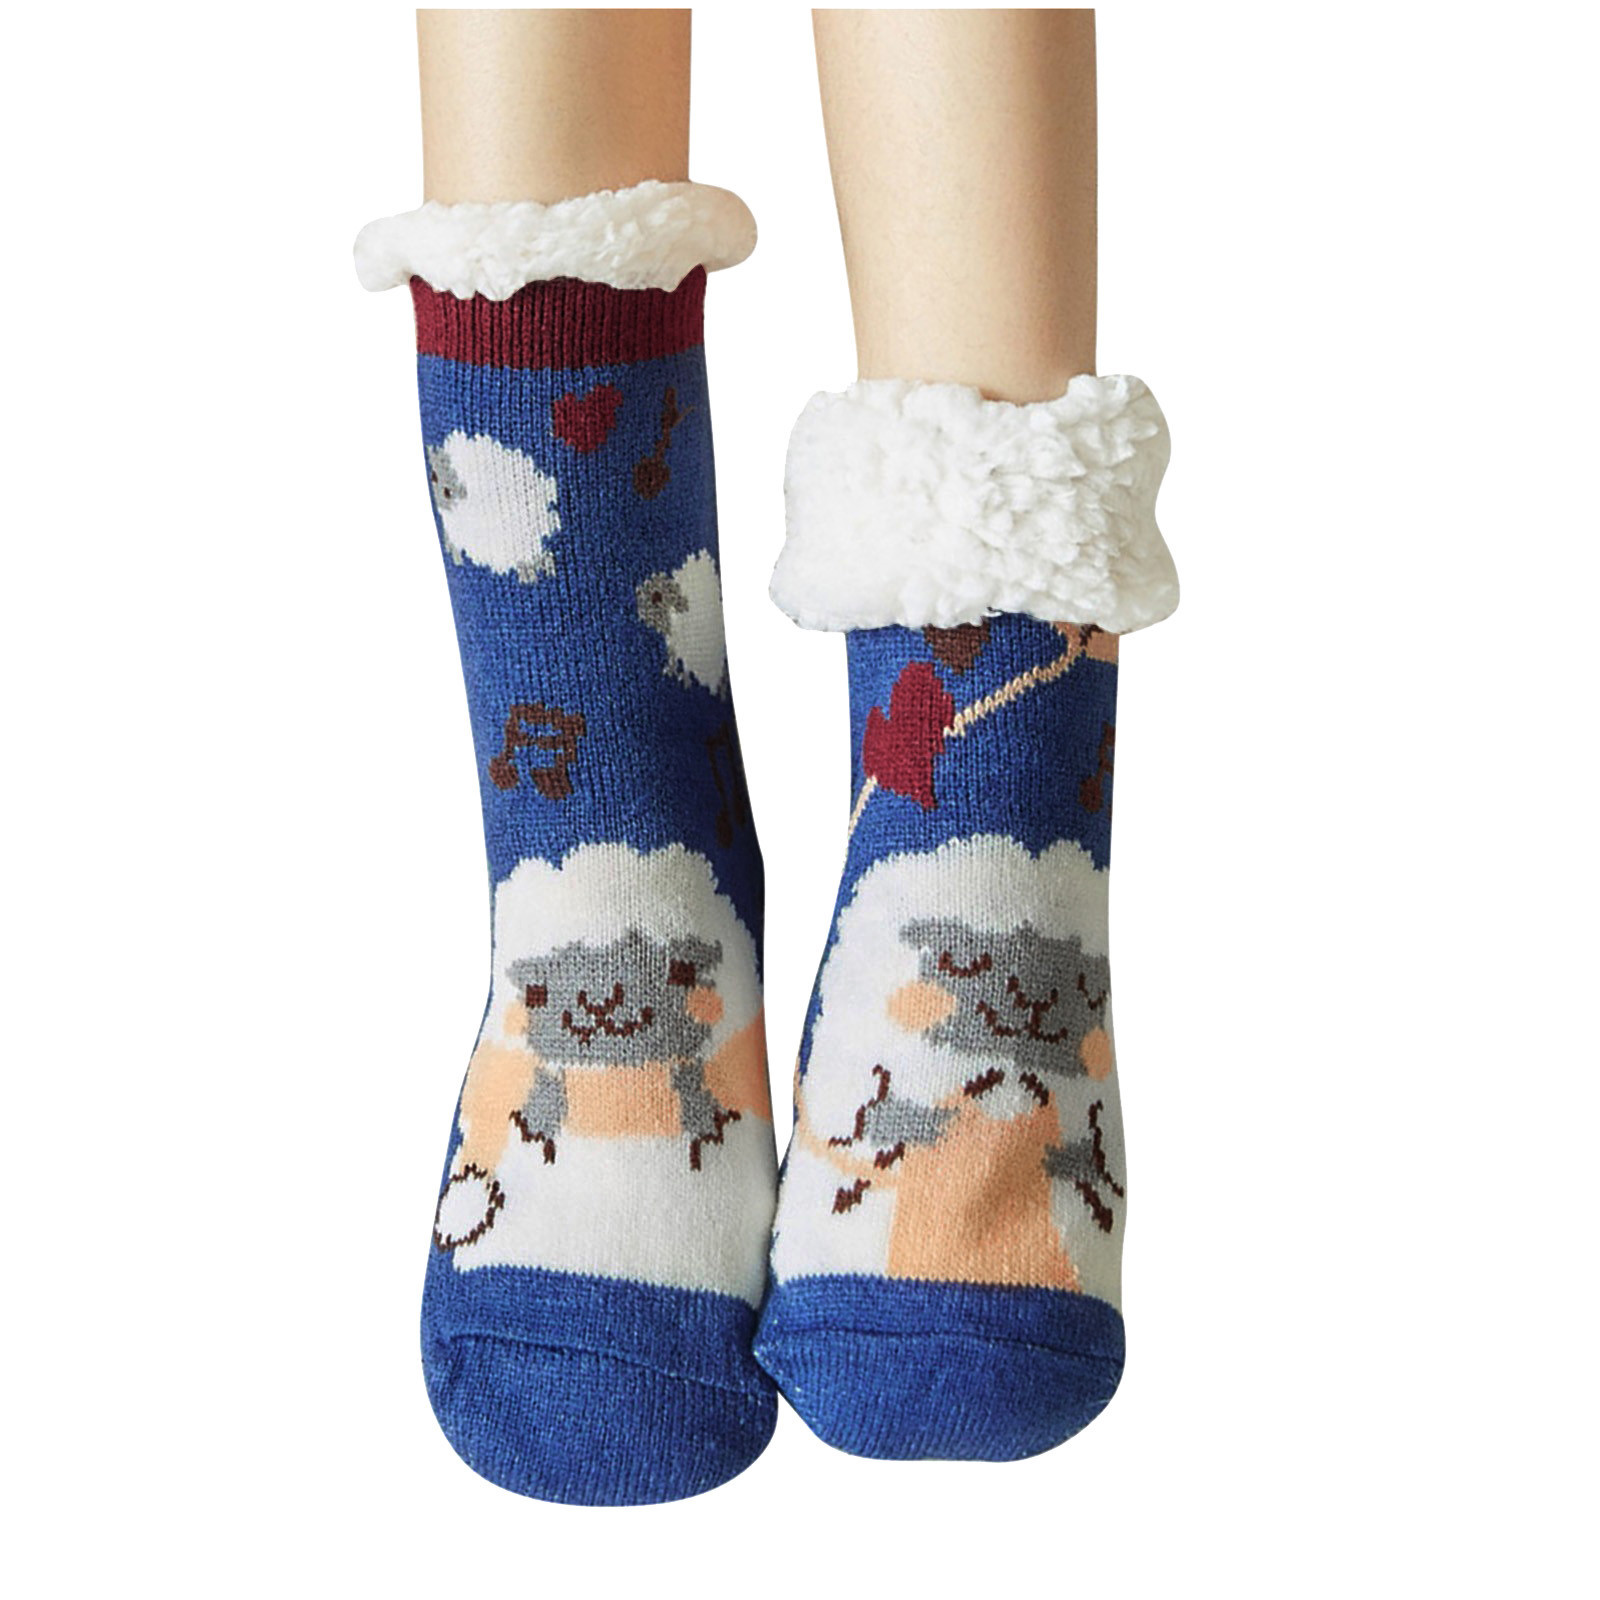 FIR Tourmaline Socks - Self Heating Therapies Socks Unisex Socks for ...